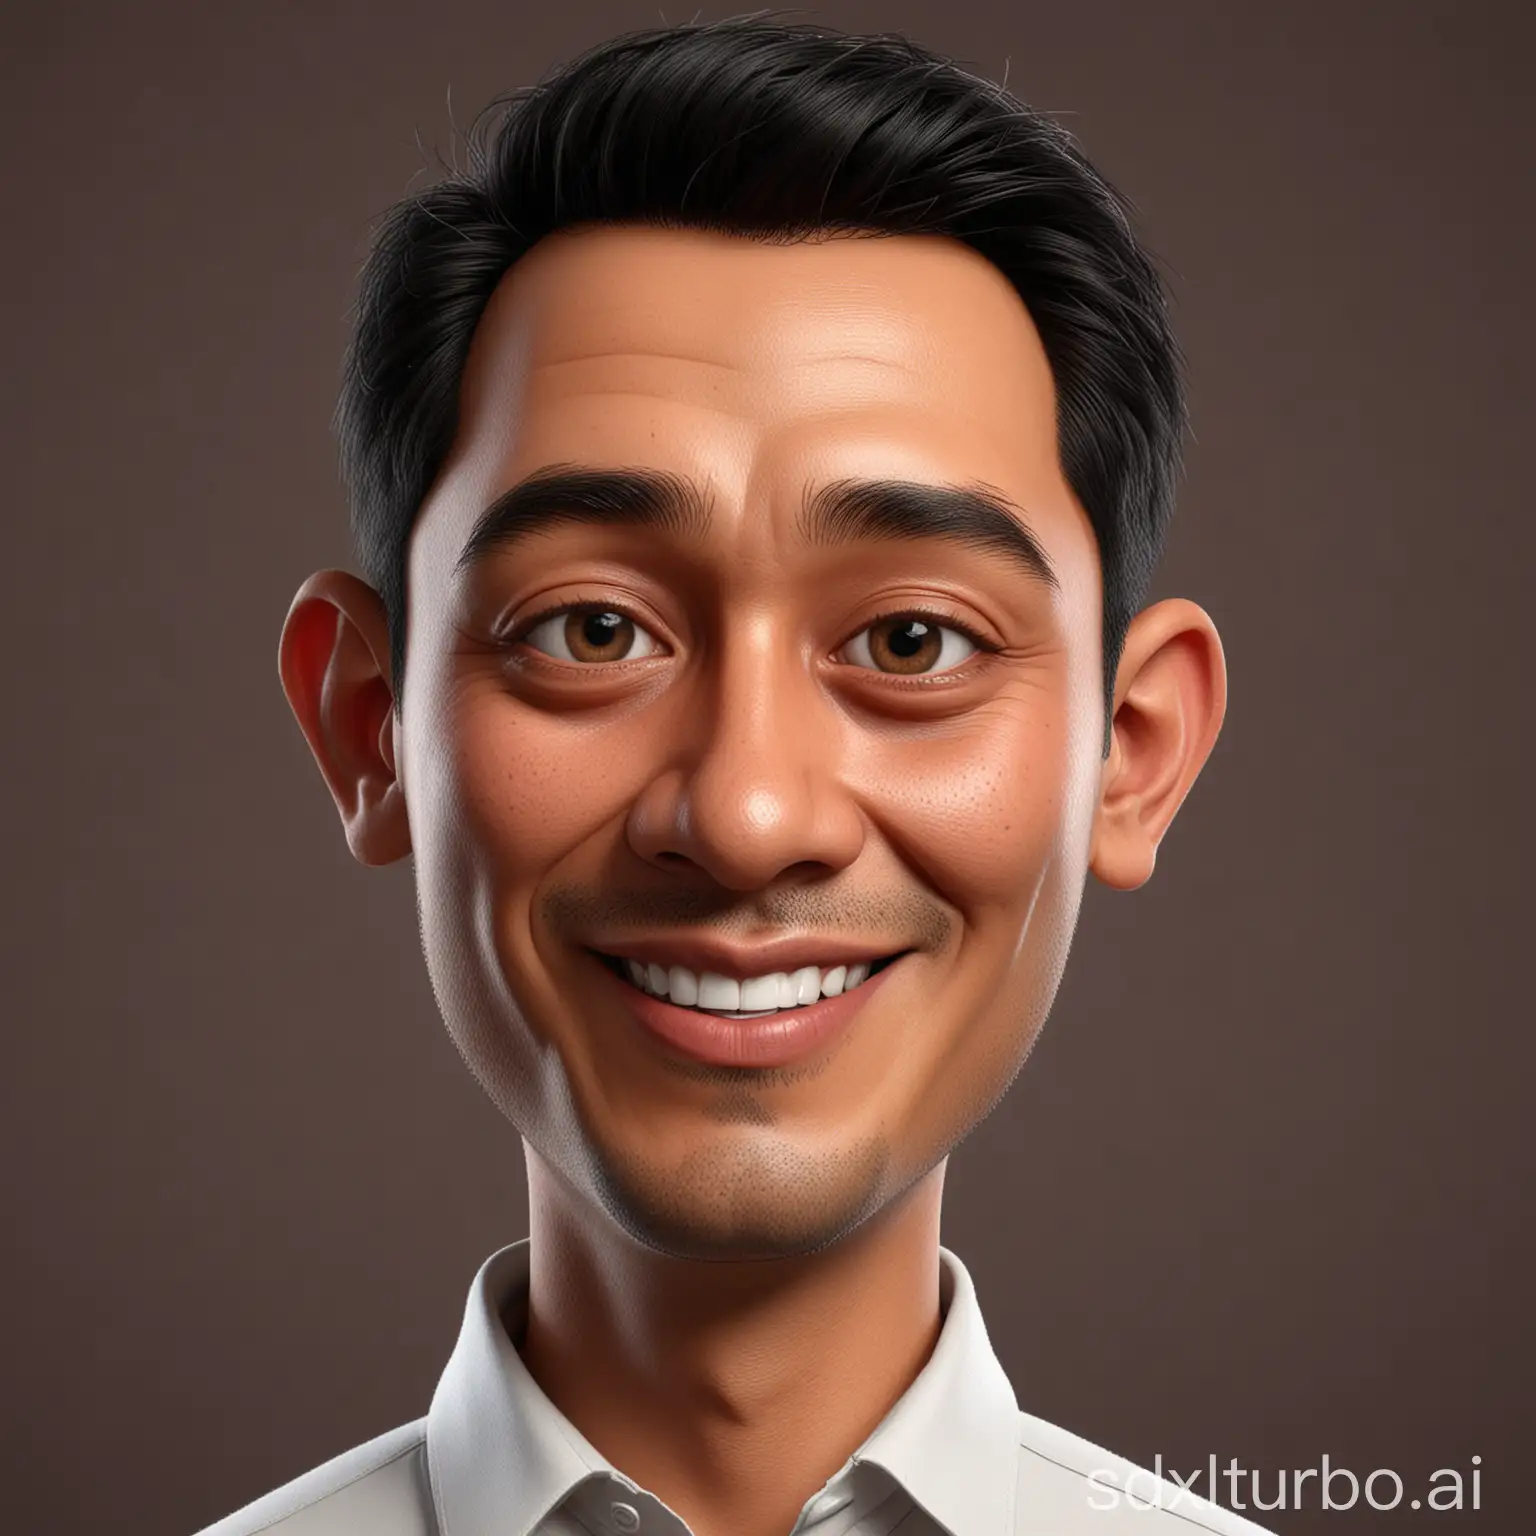 40YearOld-Indonesian-Man-in-Cartoon-Realistic-Caricature-Style